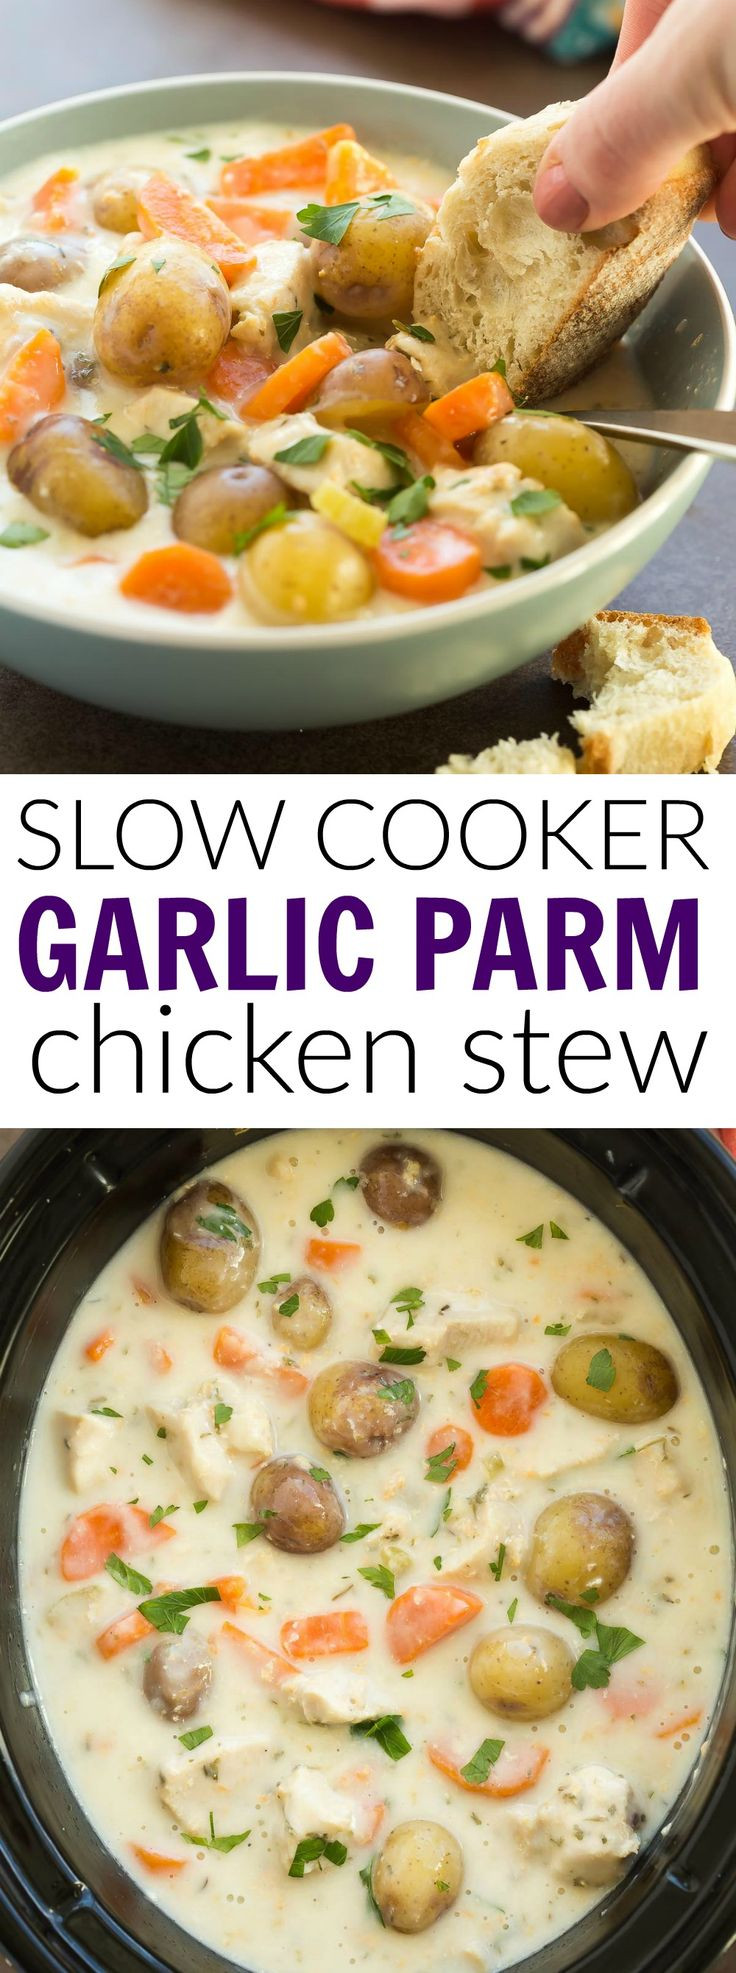 Healthy Chicken Stew Crock Pot Recipe
 Best 25 Healthy winter recipes ideas on Pinterest